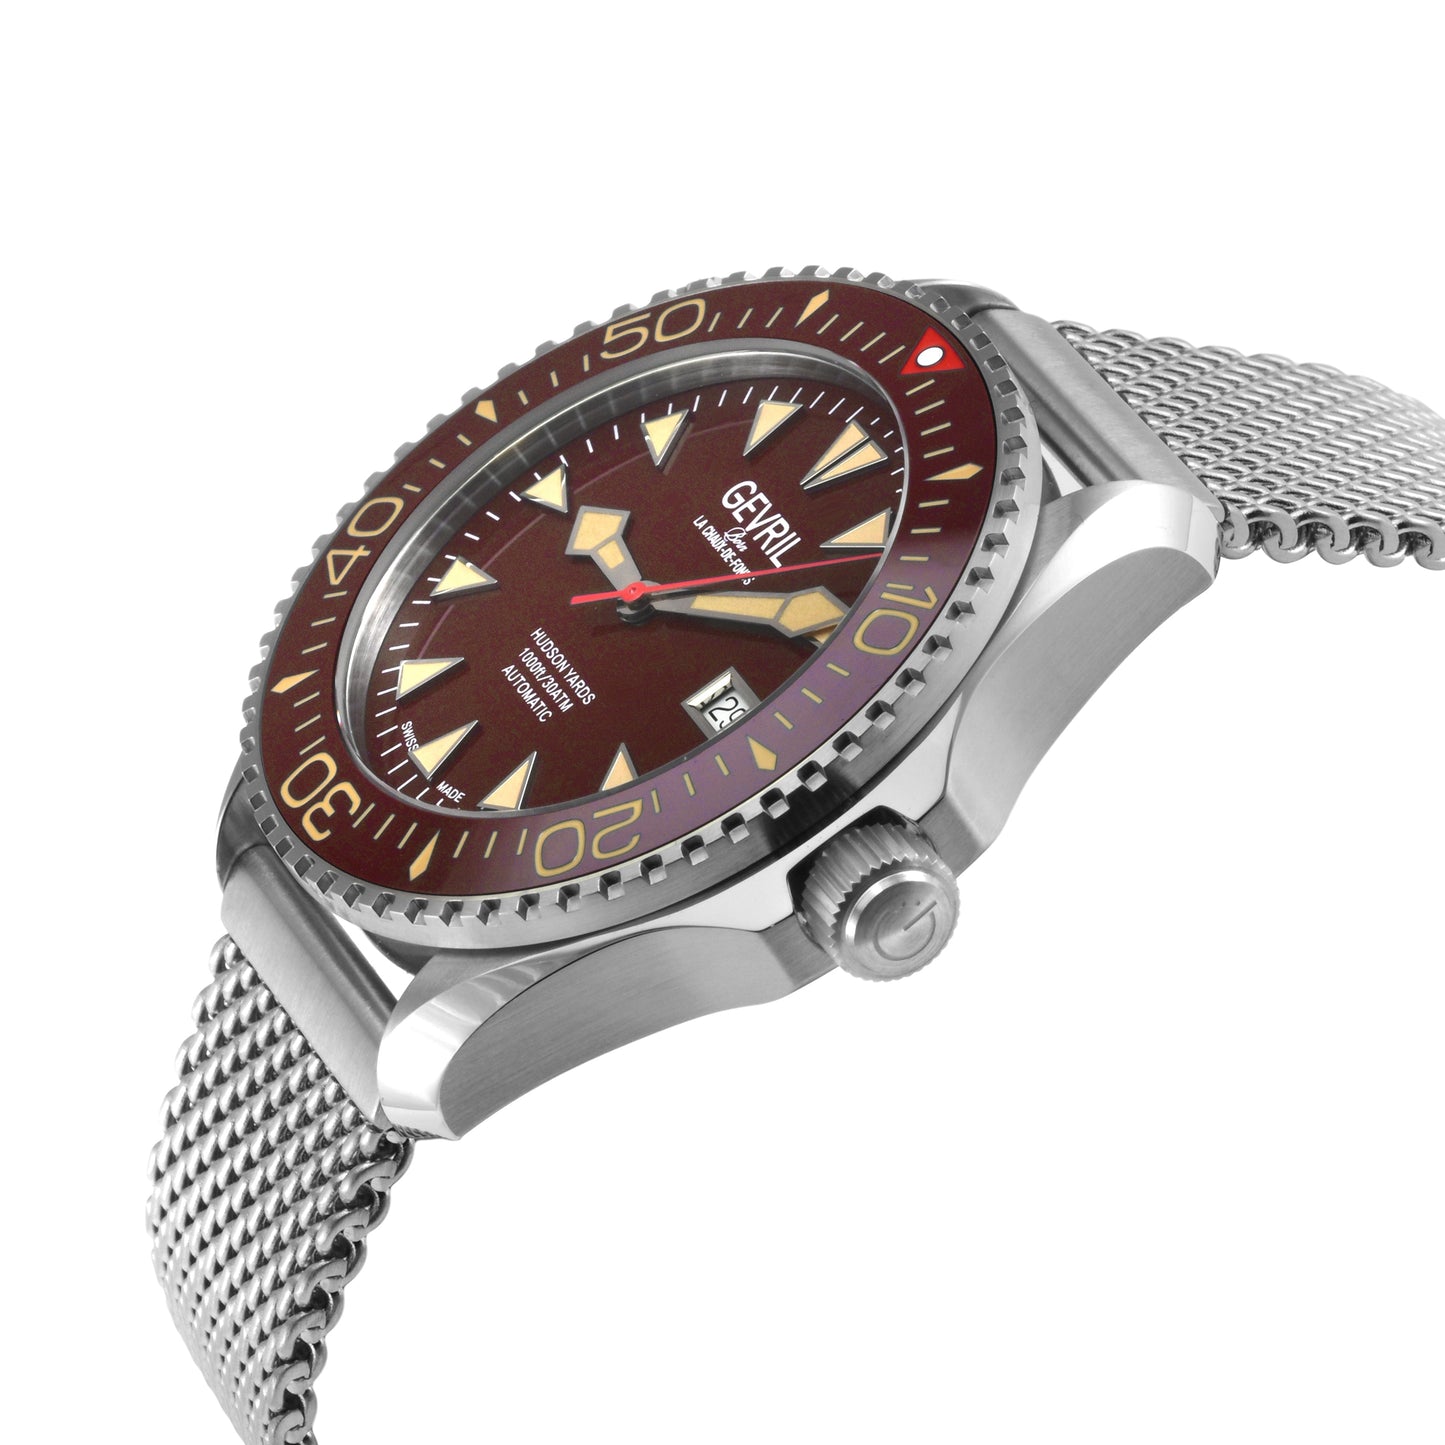 Gevril-Luxury-Swiss-Watches-Gevril Hudson Yards Old Radium Dial - Diver-48848B